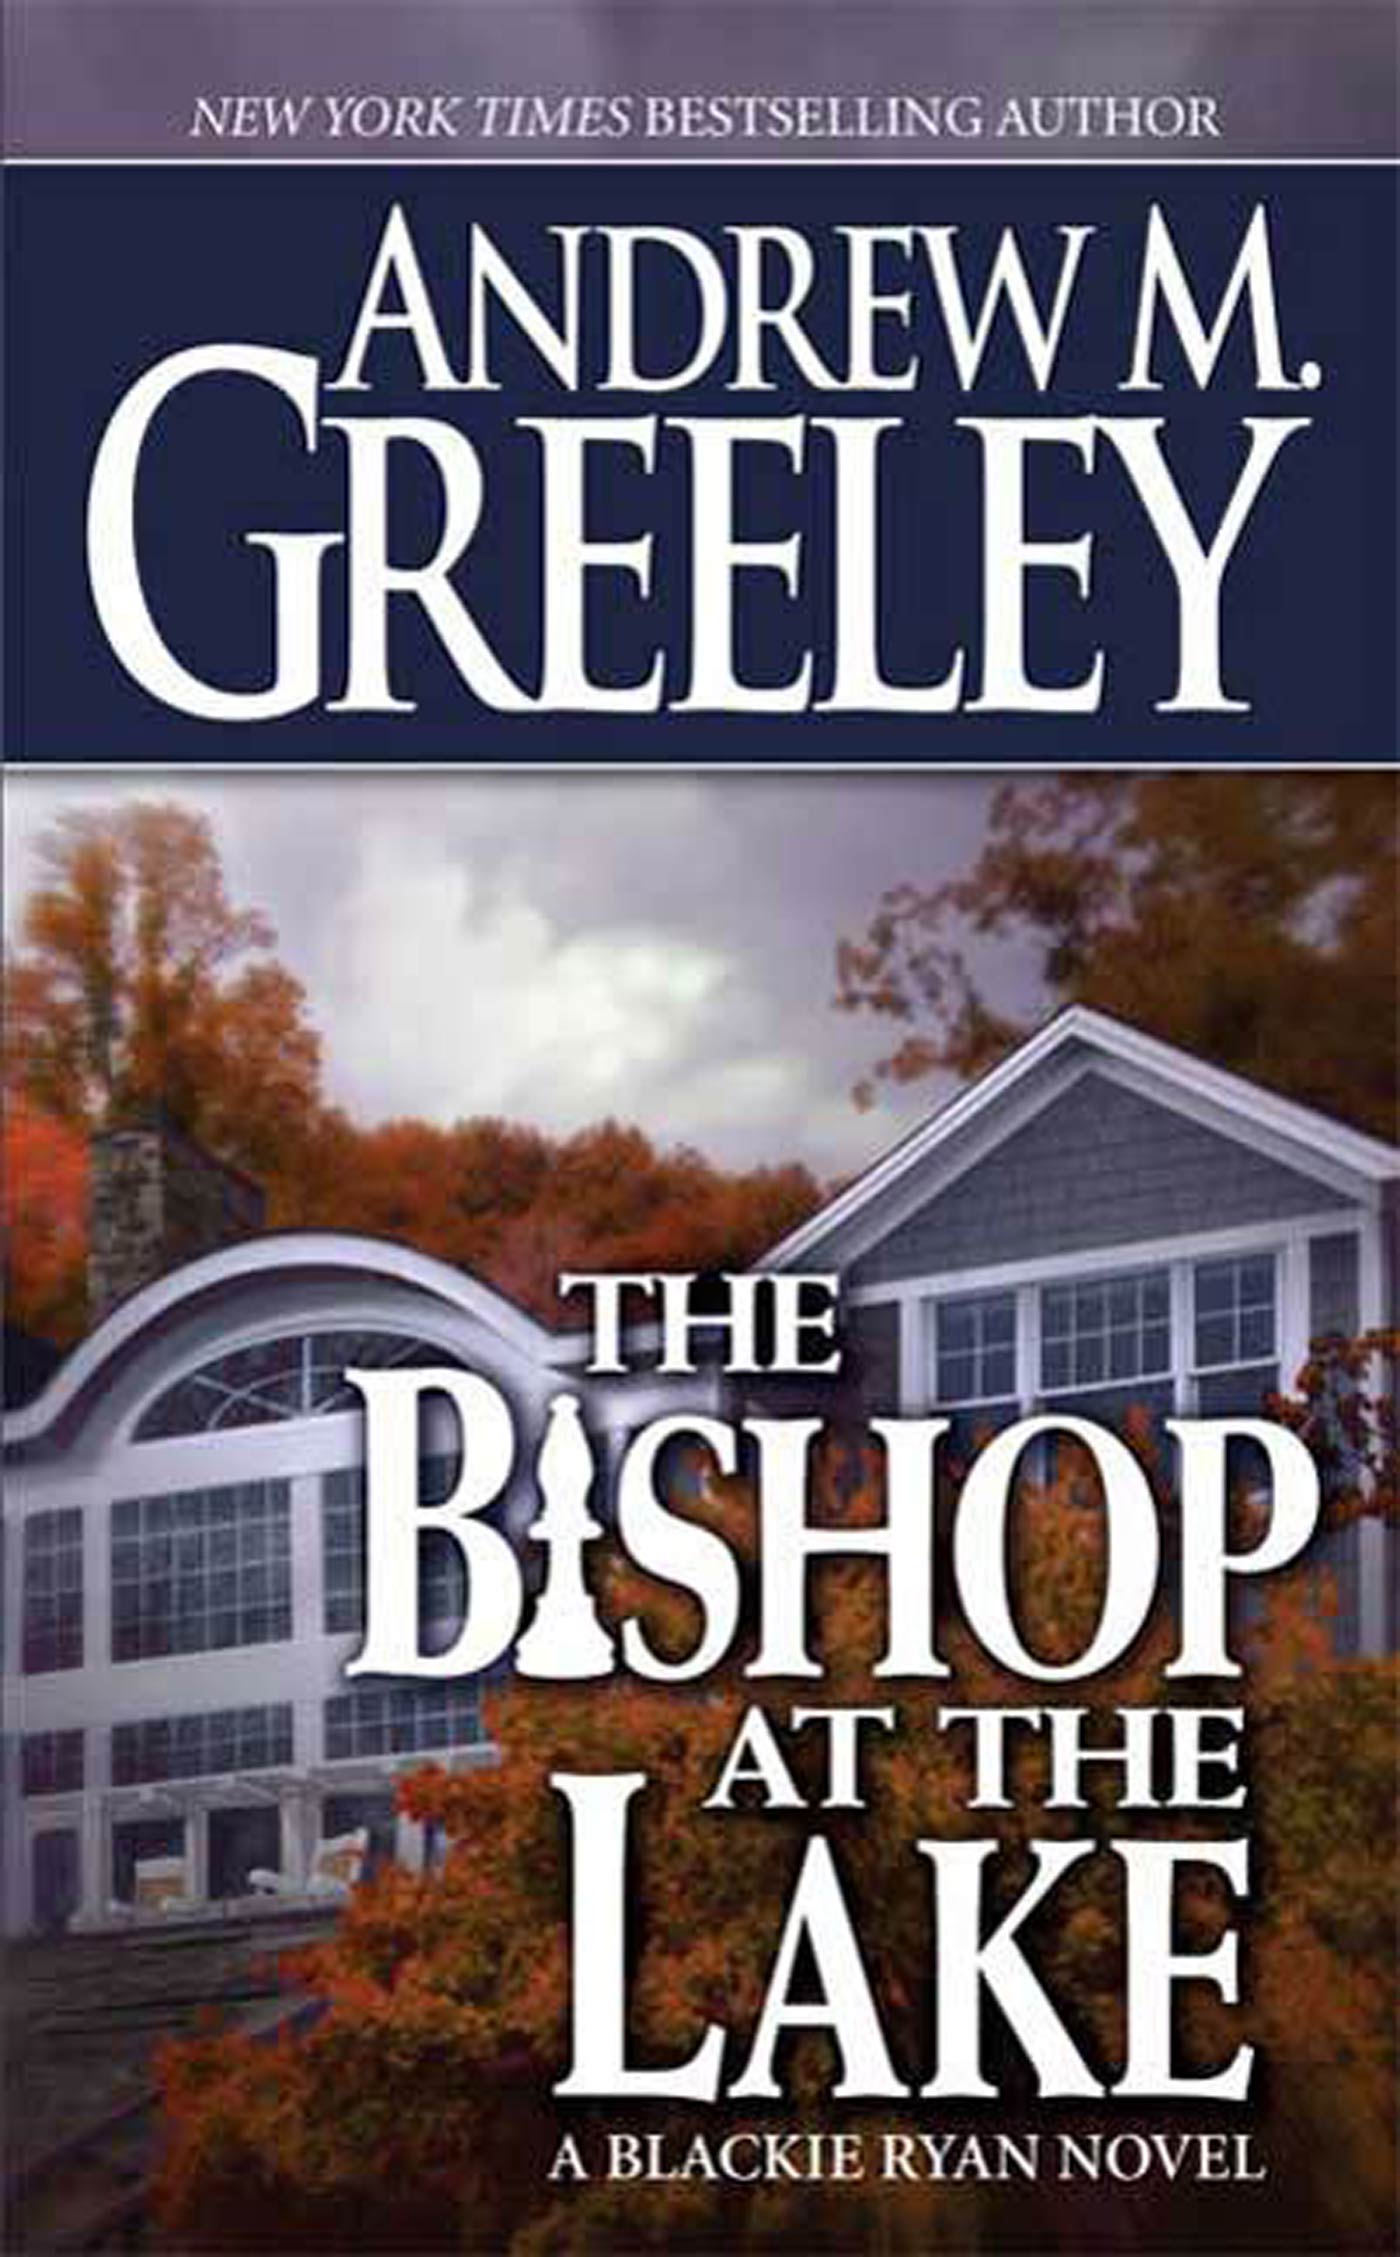 The Bishop at the Lake : A Bishop Blackie Ryan Novel by Andrew M. Greeley